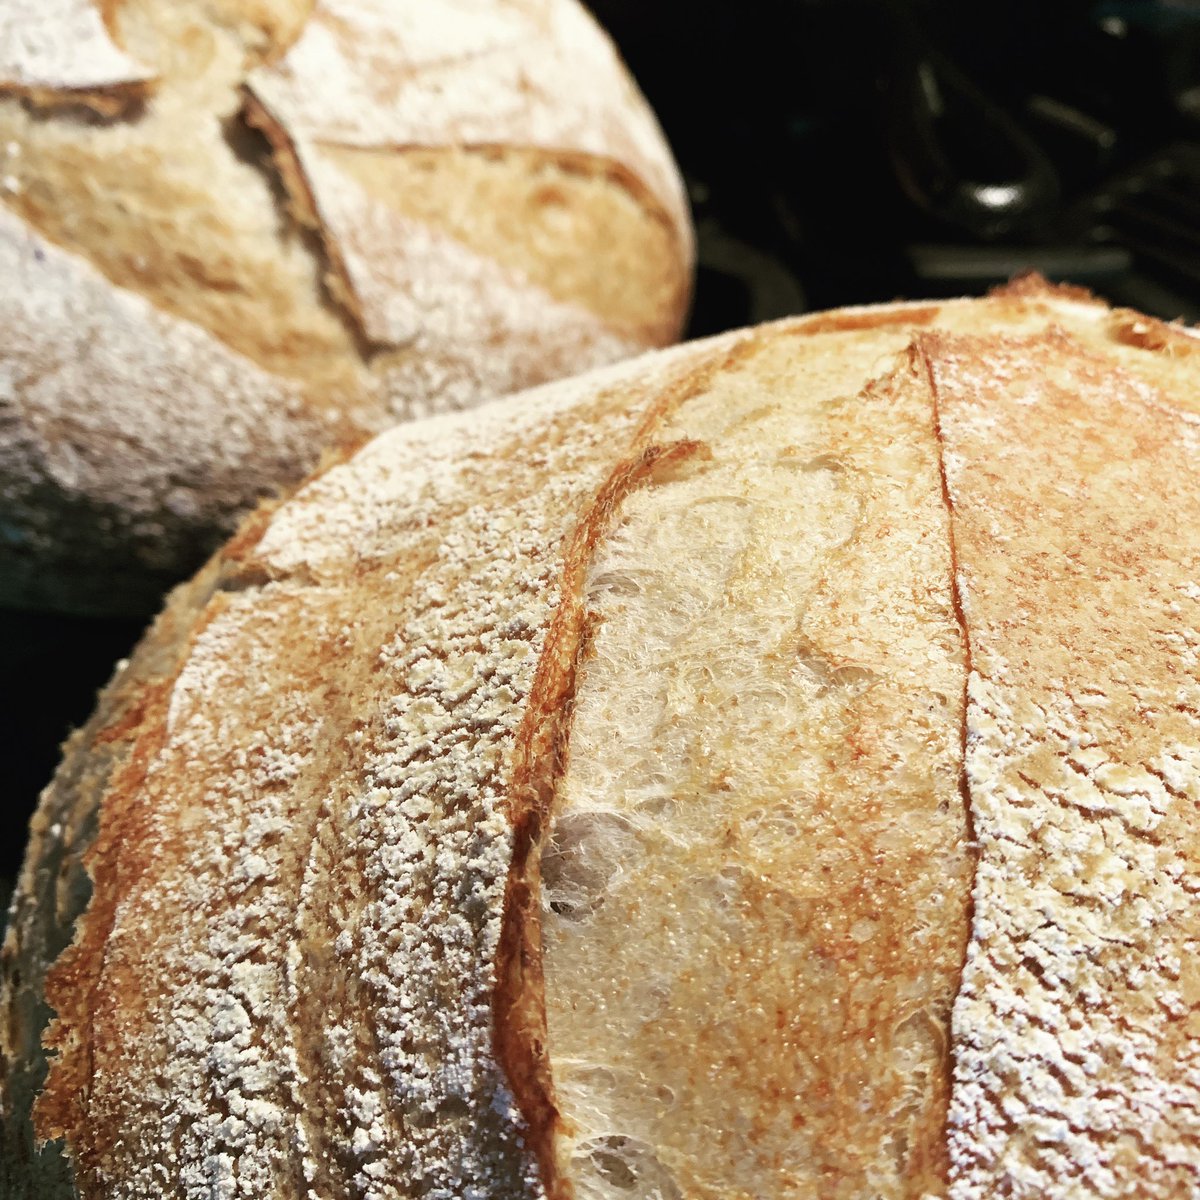 Baking bread with my starter. #sourdough #nativeyeast #naturalfermentation #baking #bread #hearthecrackle